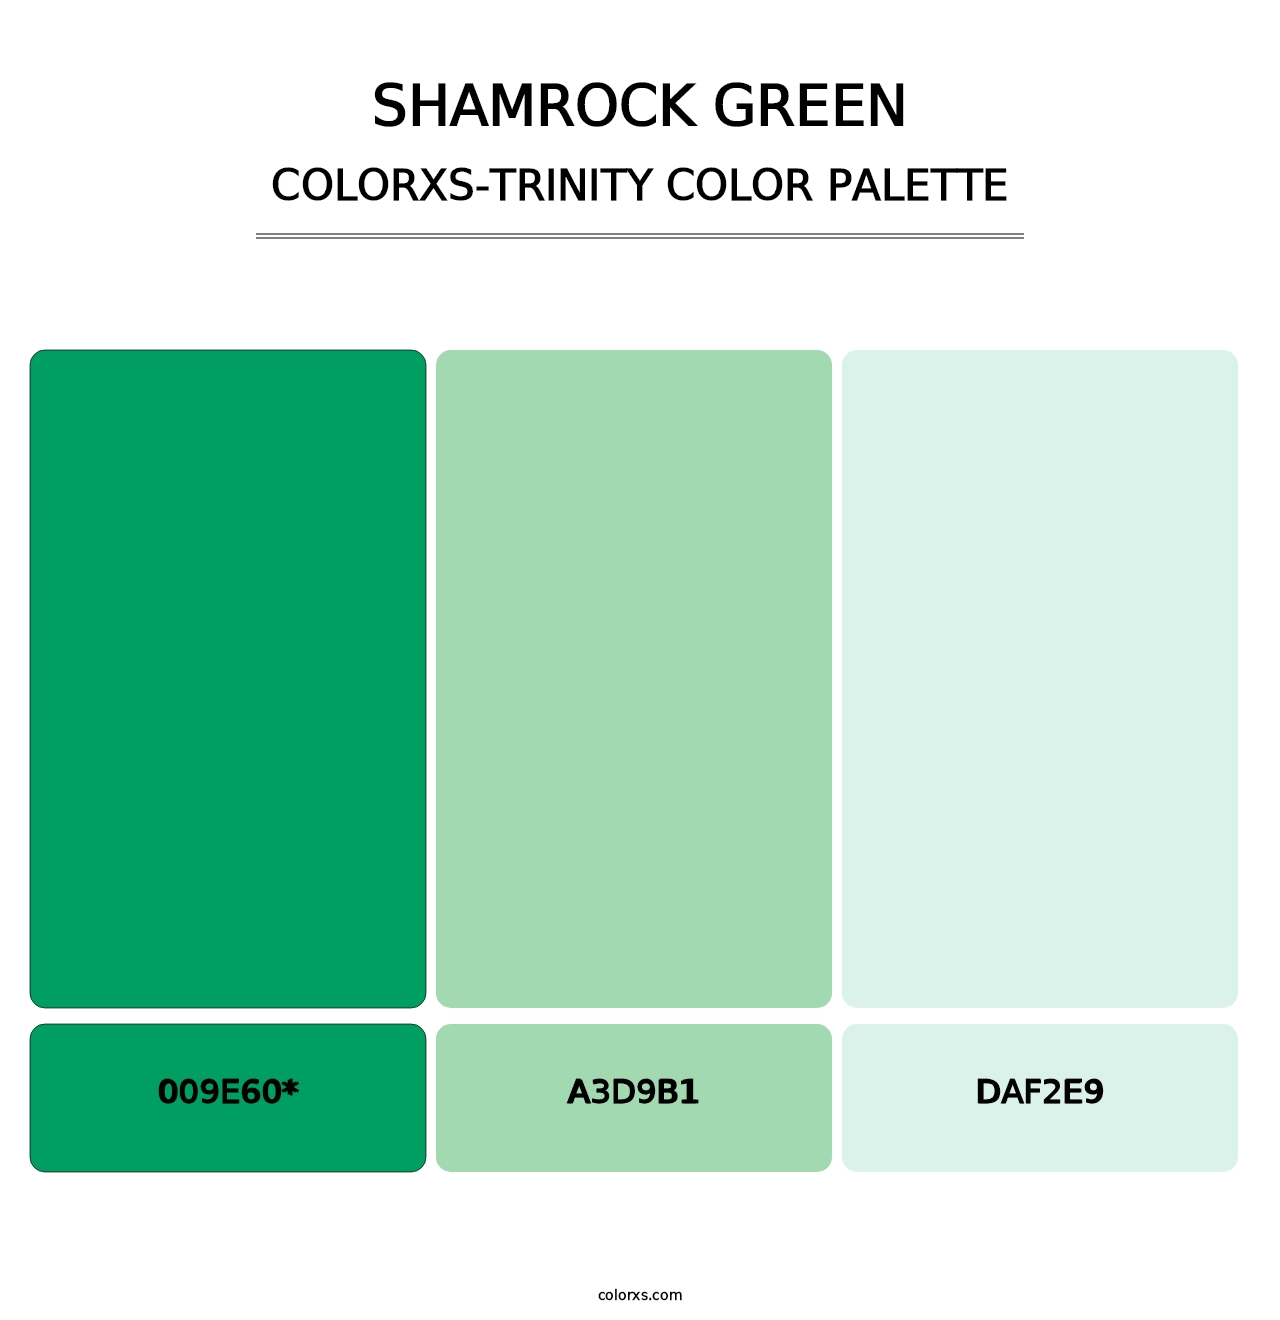 Shamrock Green - Colorxs Trinity Palette